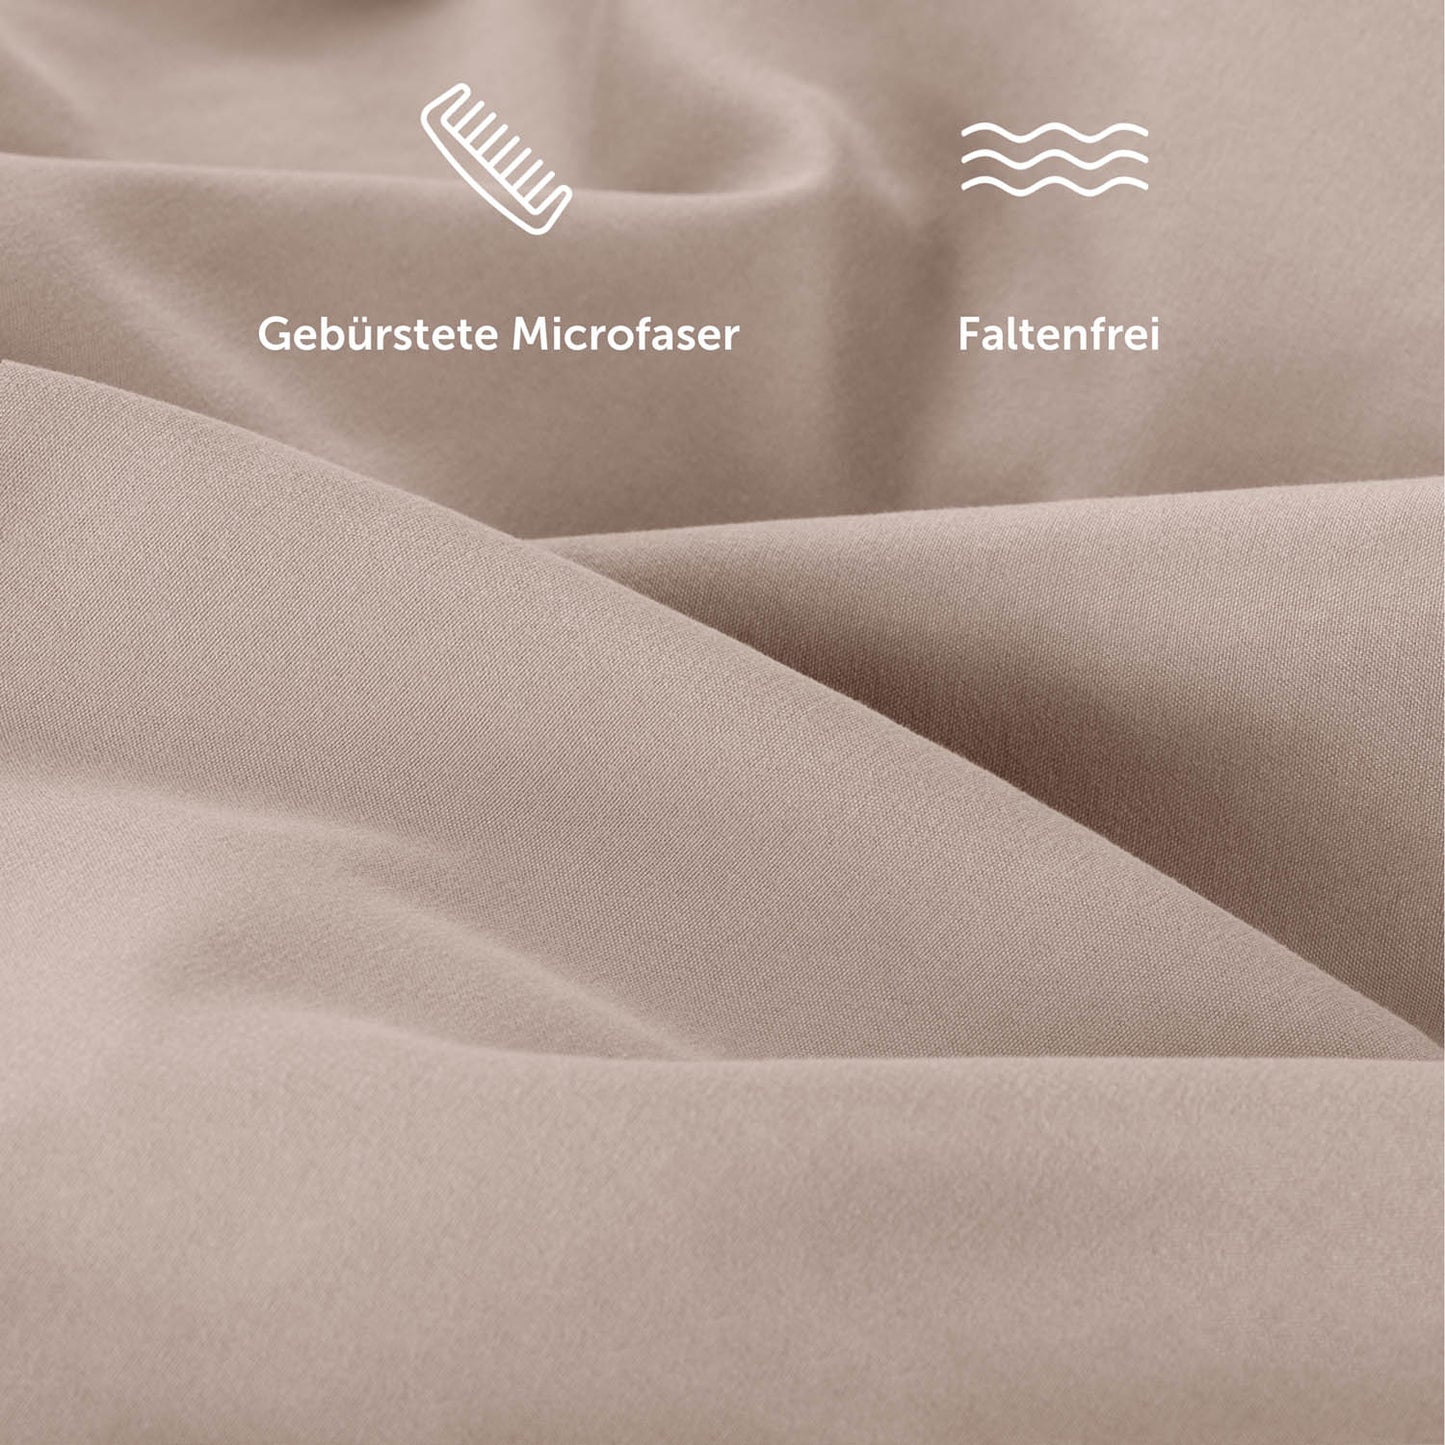 Bettbezug Set aus Mikrofaser - Superweich, Oekotex Zertifiziert, 155x200cm